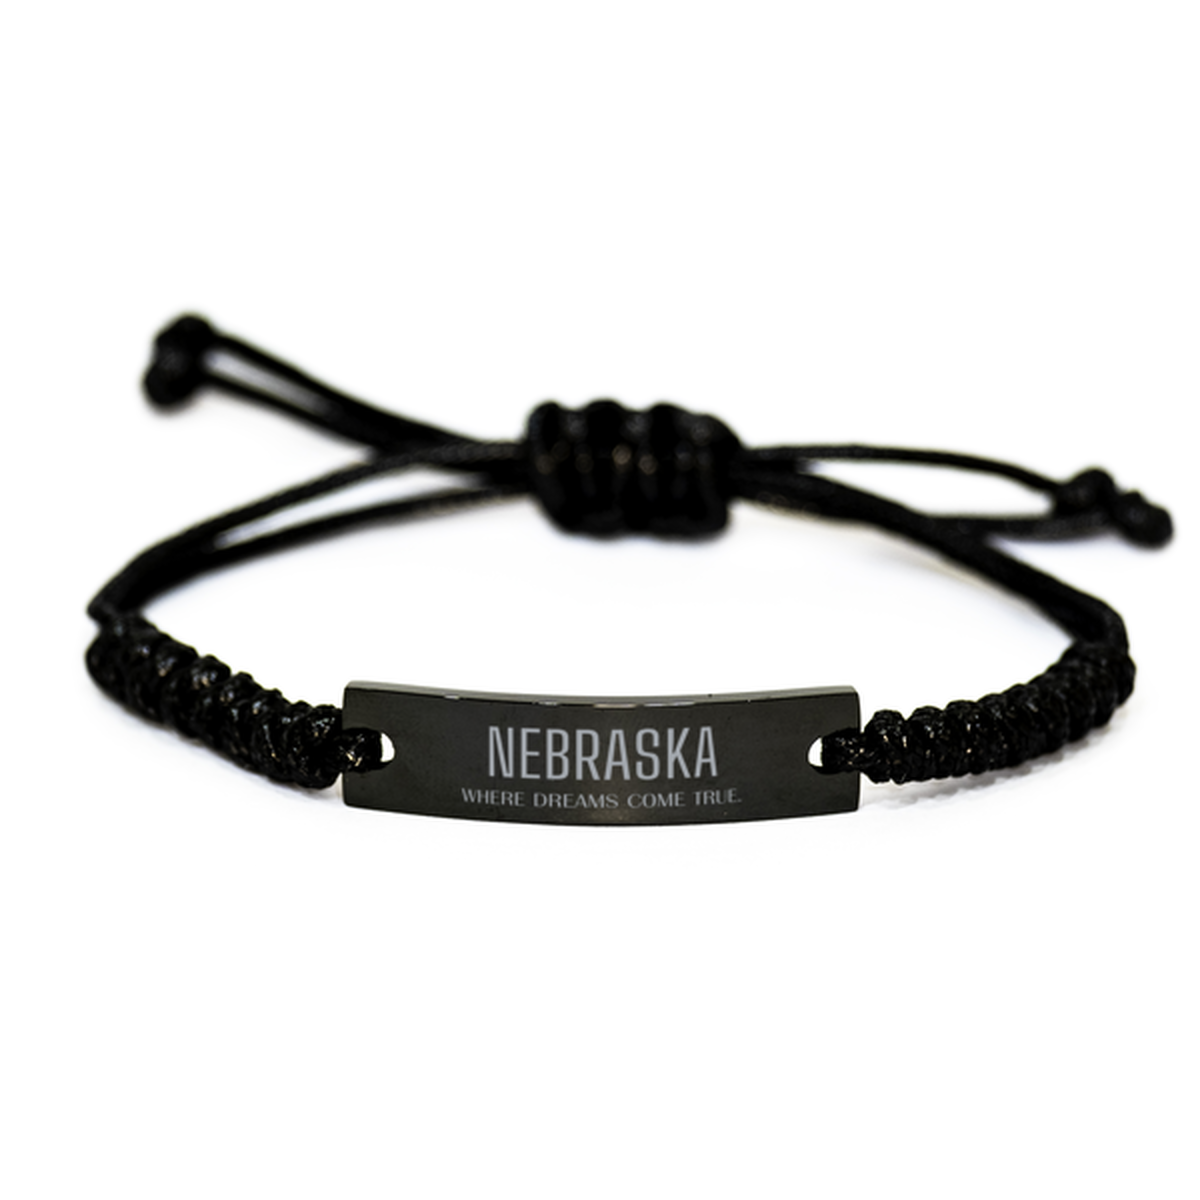 Love Nebraska State Black Rope Bracelet, Nebraska Where dreams come true, Birthday Inspirational Gifts For Nebraska Men, Women, Friends